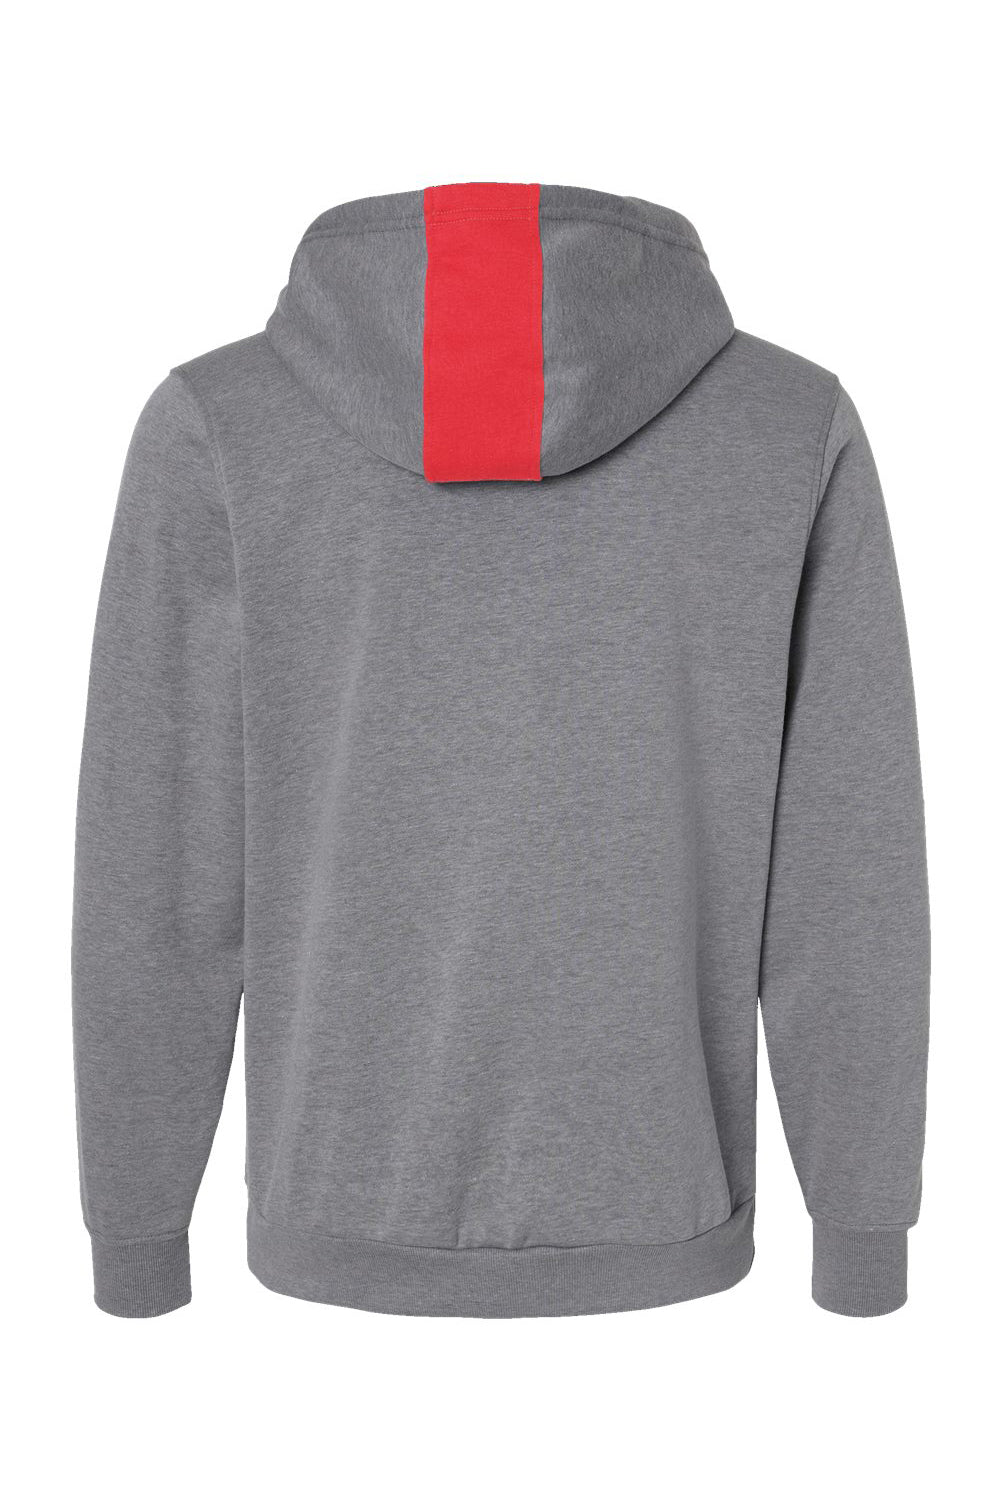 Augusta Sportswear 6865 Mens Eco Revive 3 Season Fleece Hooded Sweatshirt Hoodie Scarlet Red/Heather Grey Flat Back